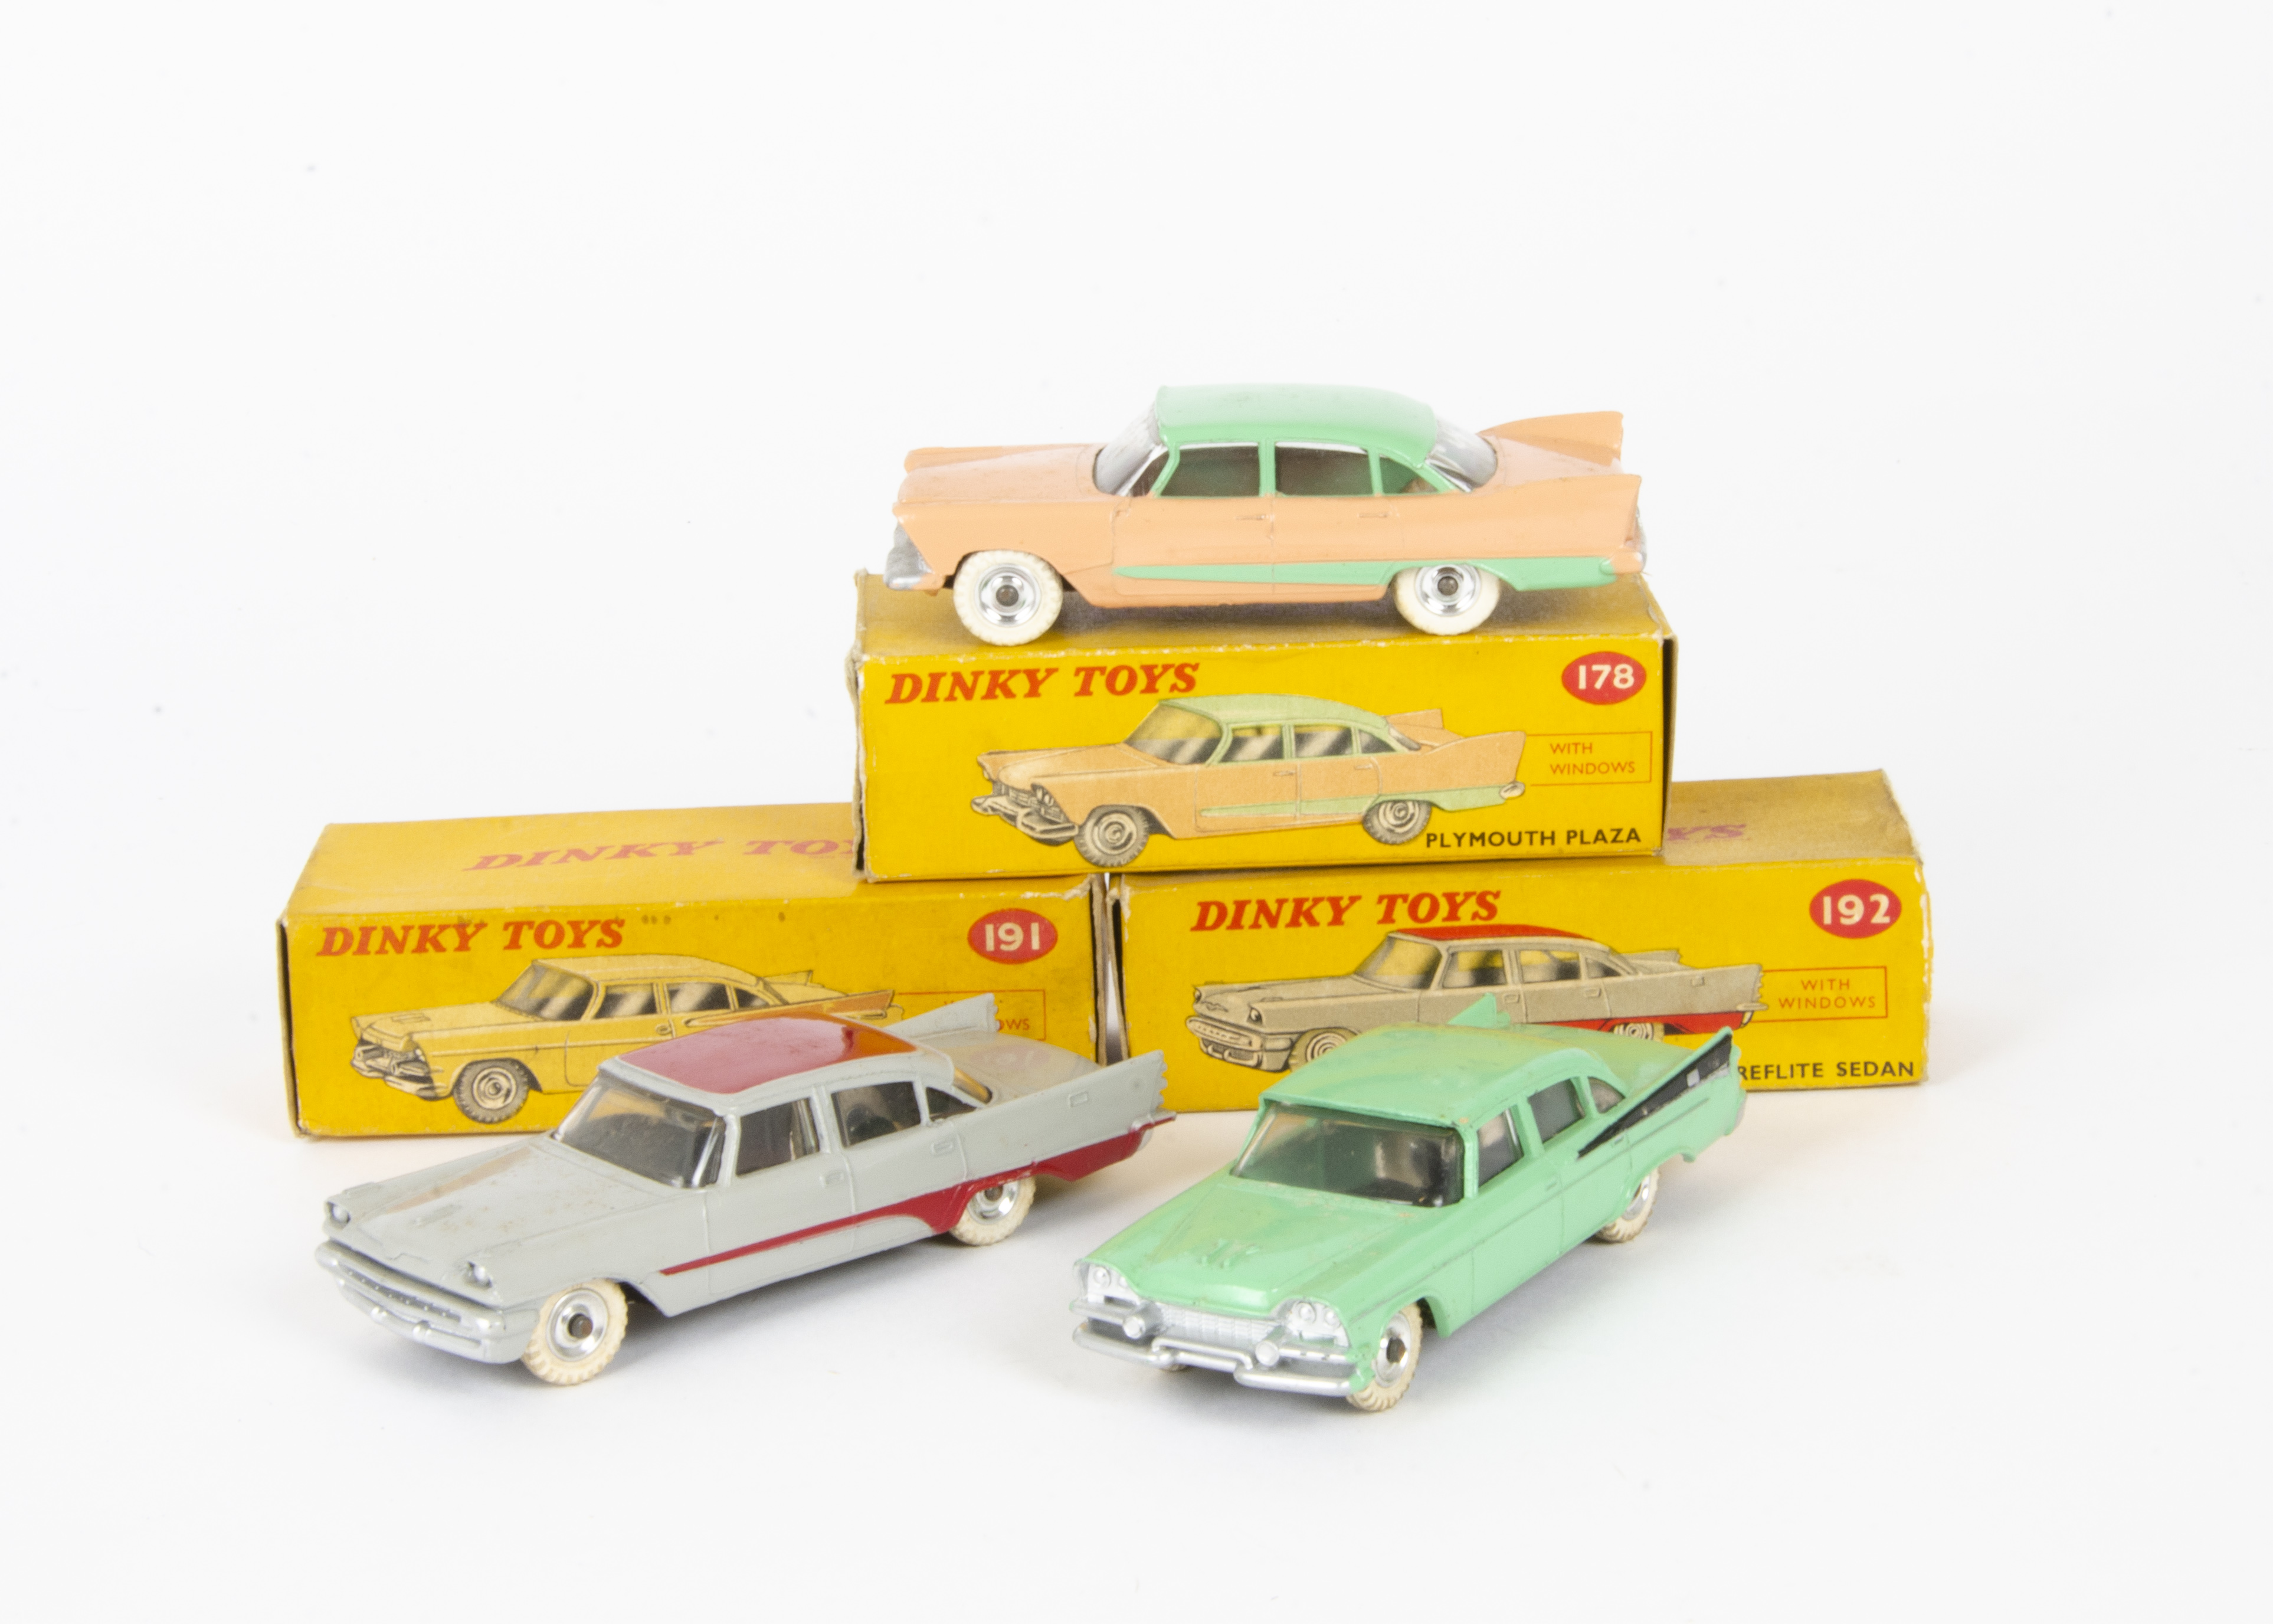 Dinky Toys American Cars, 191 Dodge Royal Sedan, 192 De Soto Fireflite Sedan, 178 Plymouth Plaza,